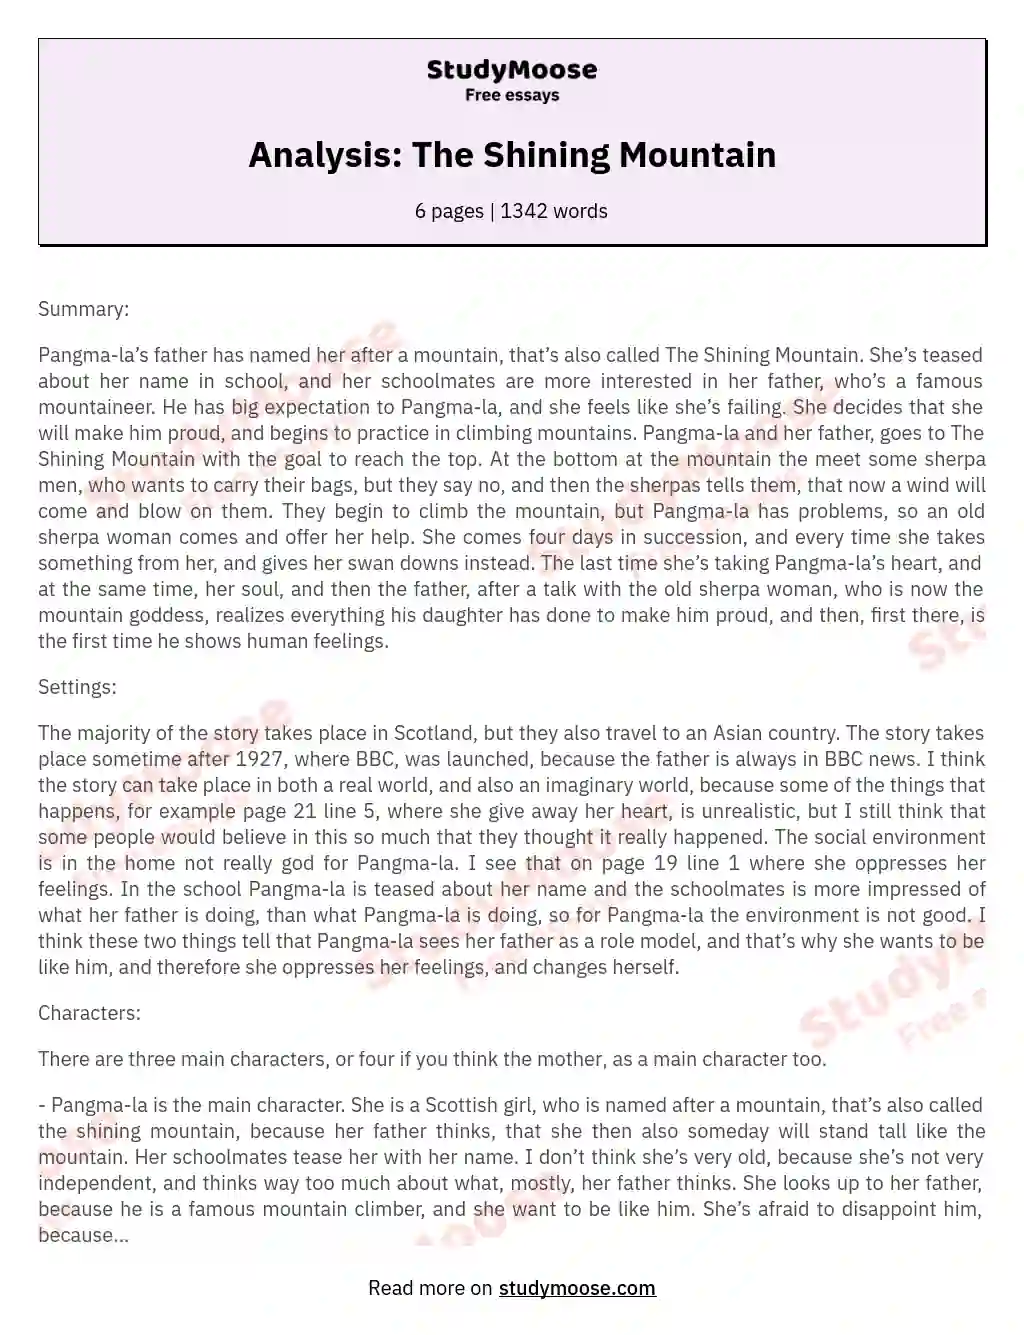 Analysis: The Shining Mountain essay